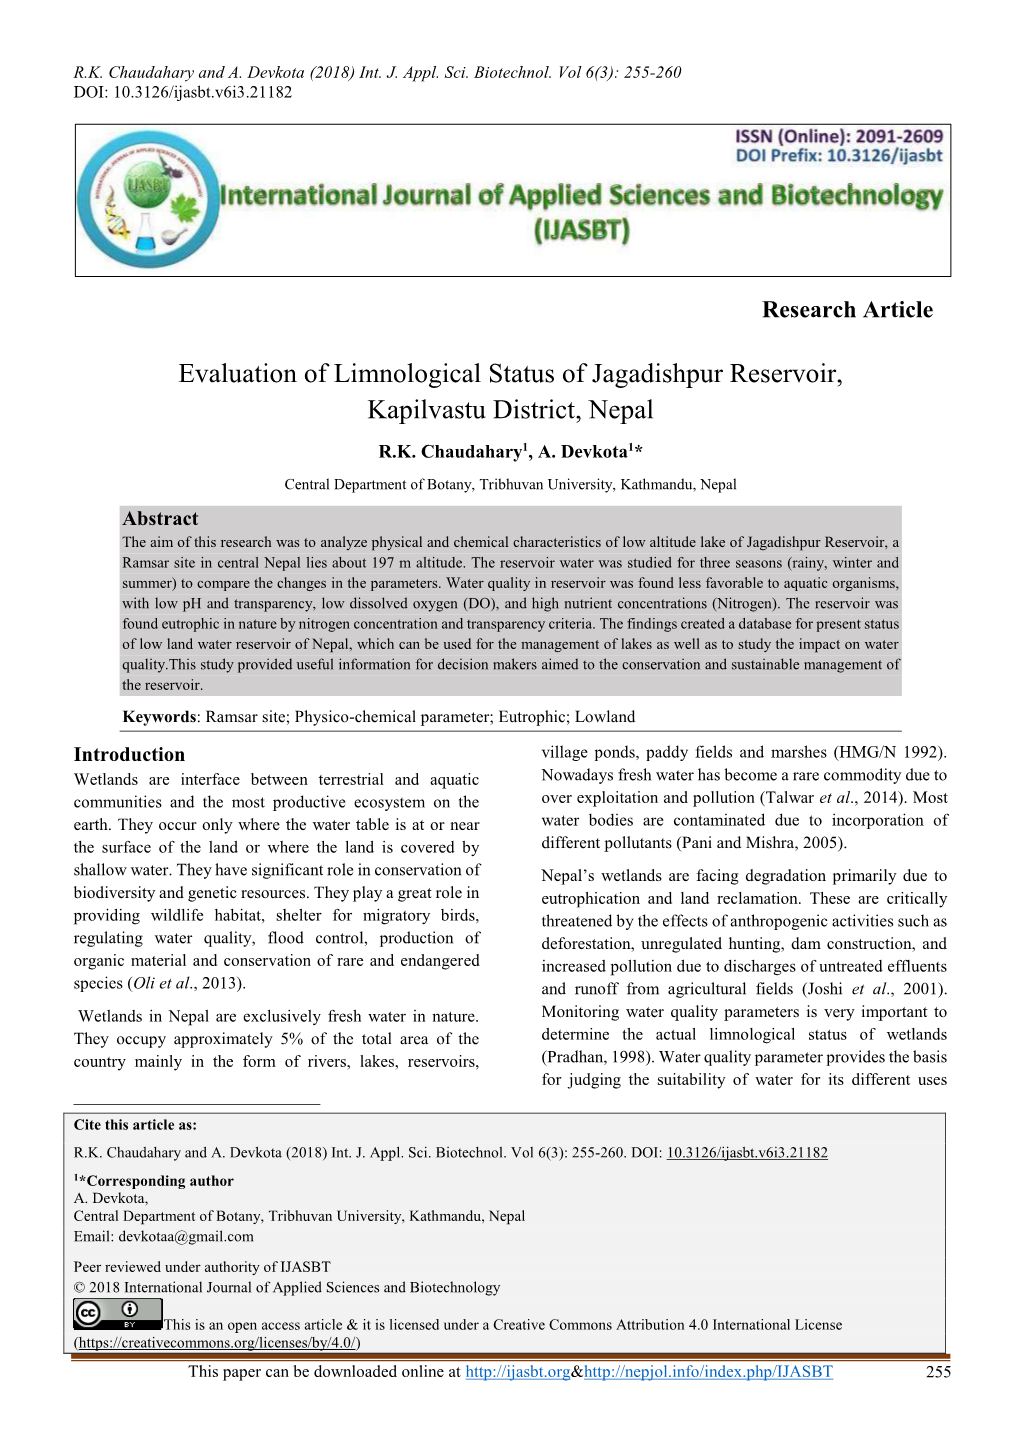 Evaluation of Limnological Status of Jagadishpur Reservoir, Kapilvastu District, Nepal R.K